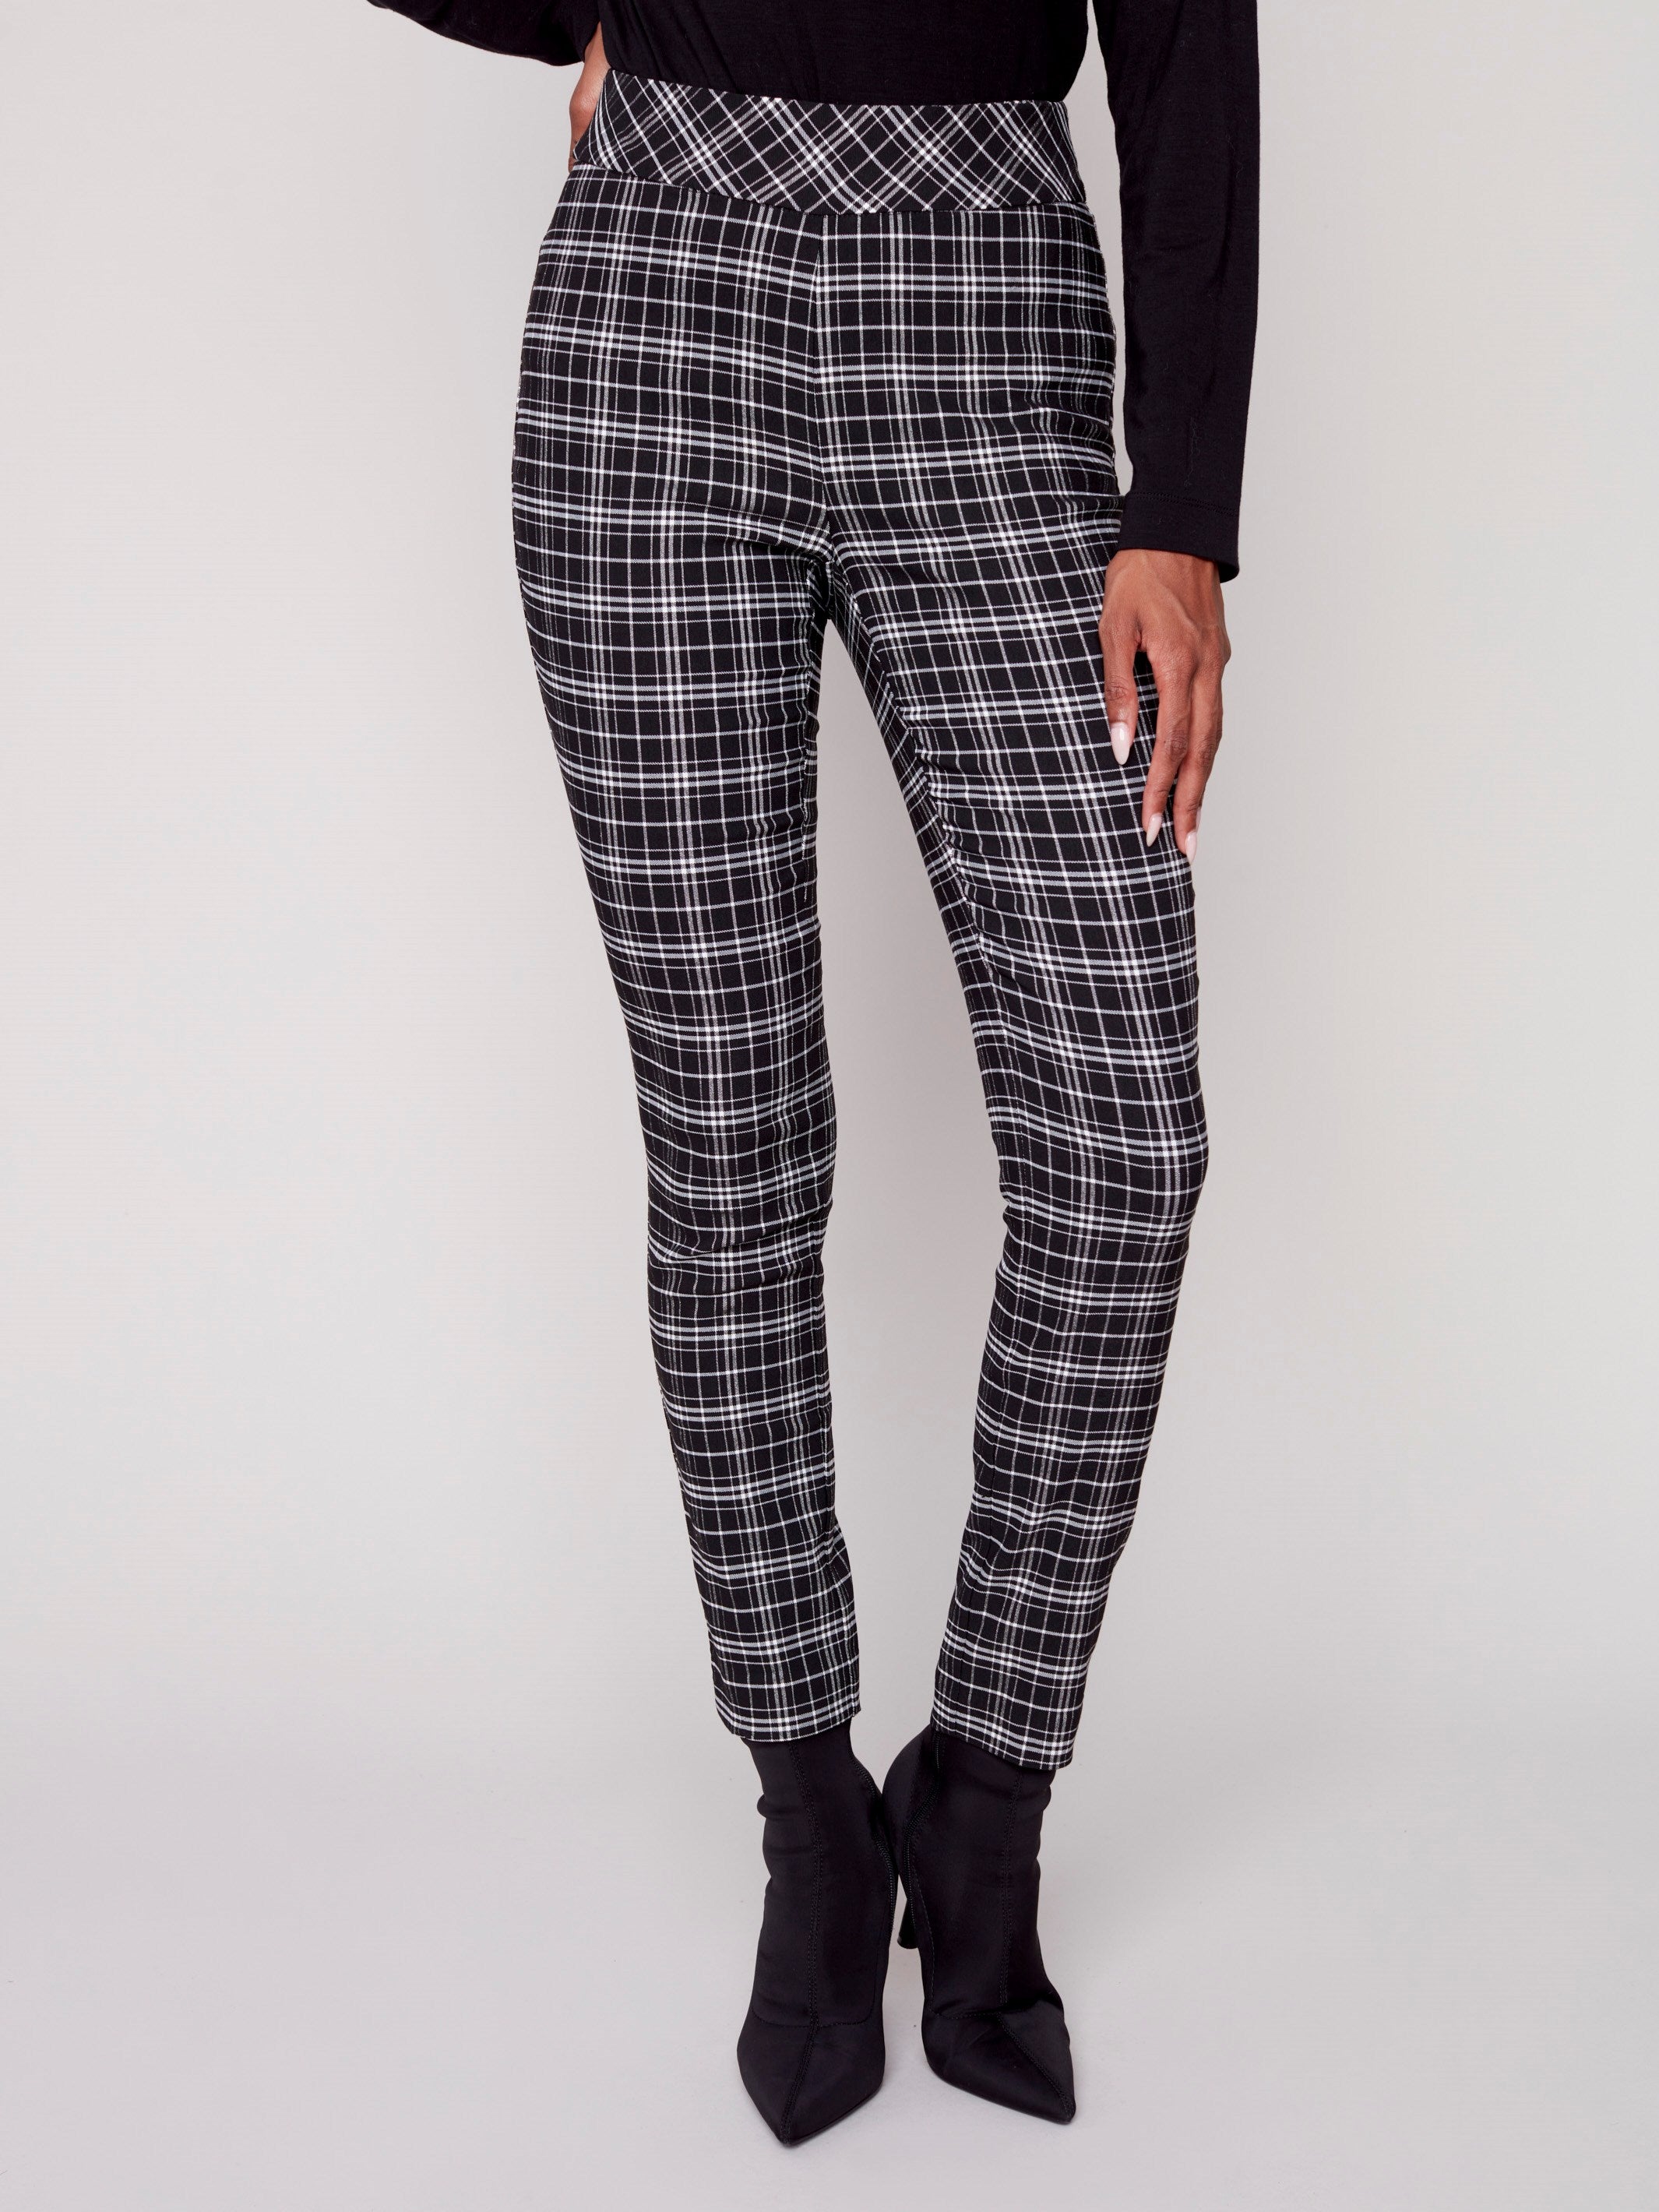 Pantalons motif tartan style fourreau - Noir et Blanc